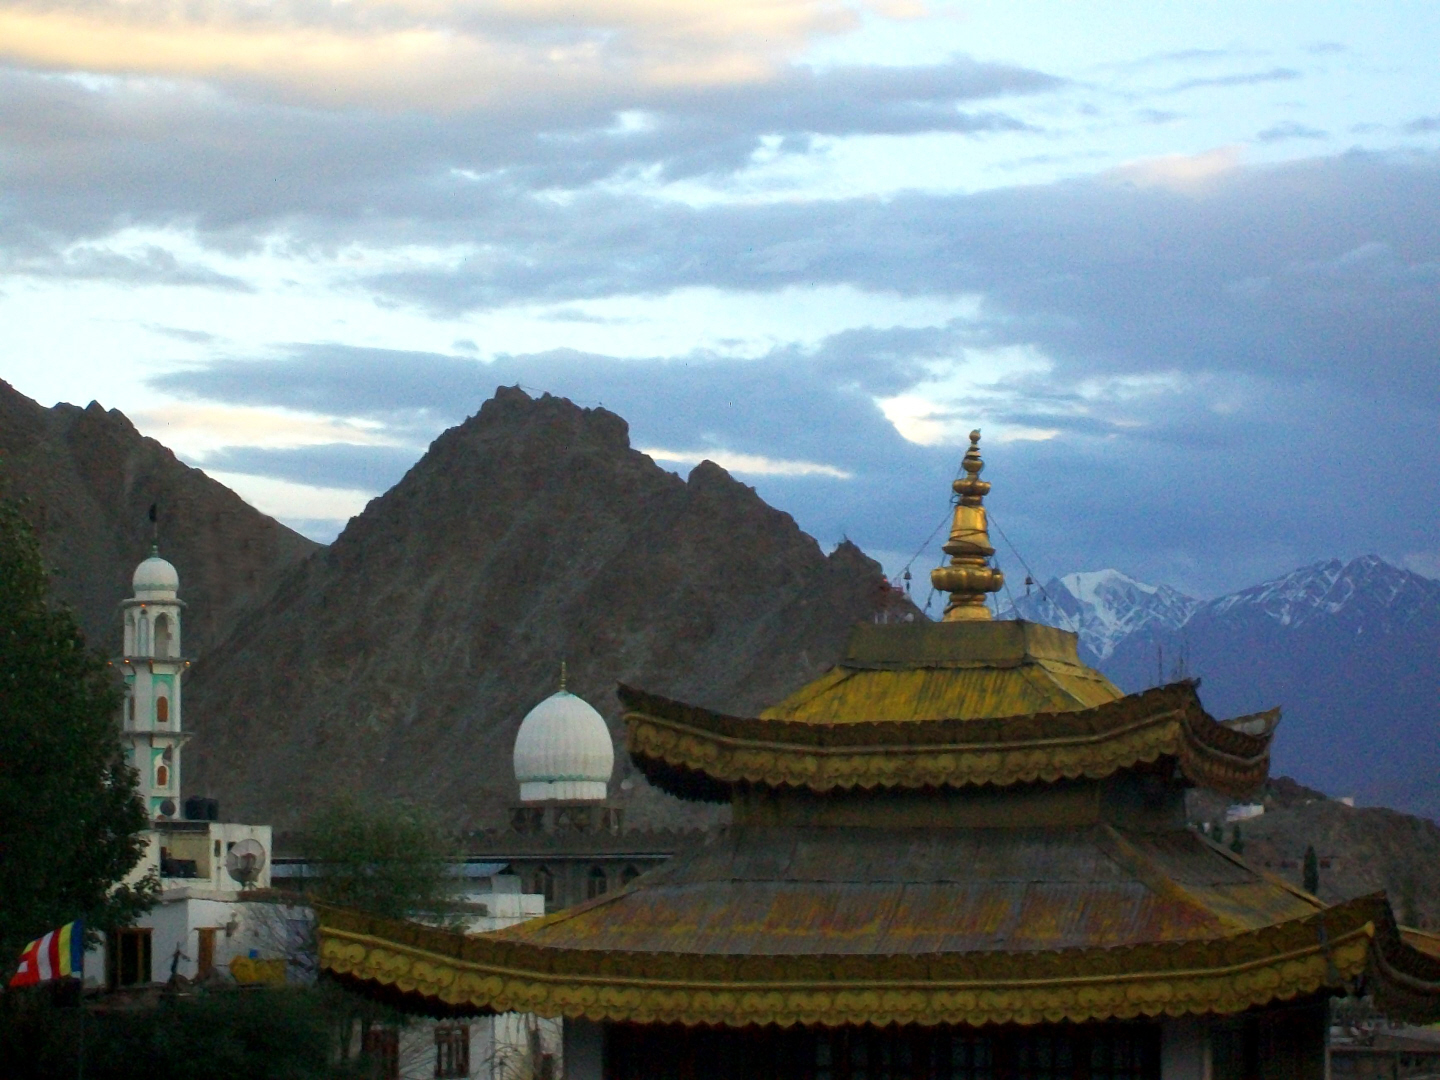 Top of Stupa, Dome & Minaret of Mosque - Ley, Ladakh - Himalaya Mountains